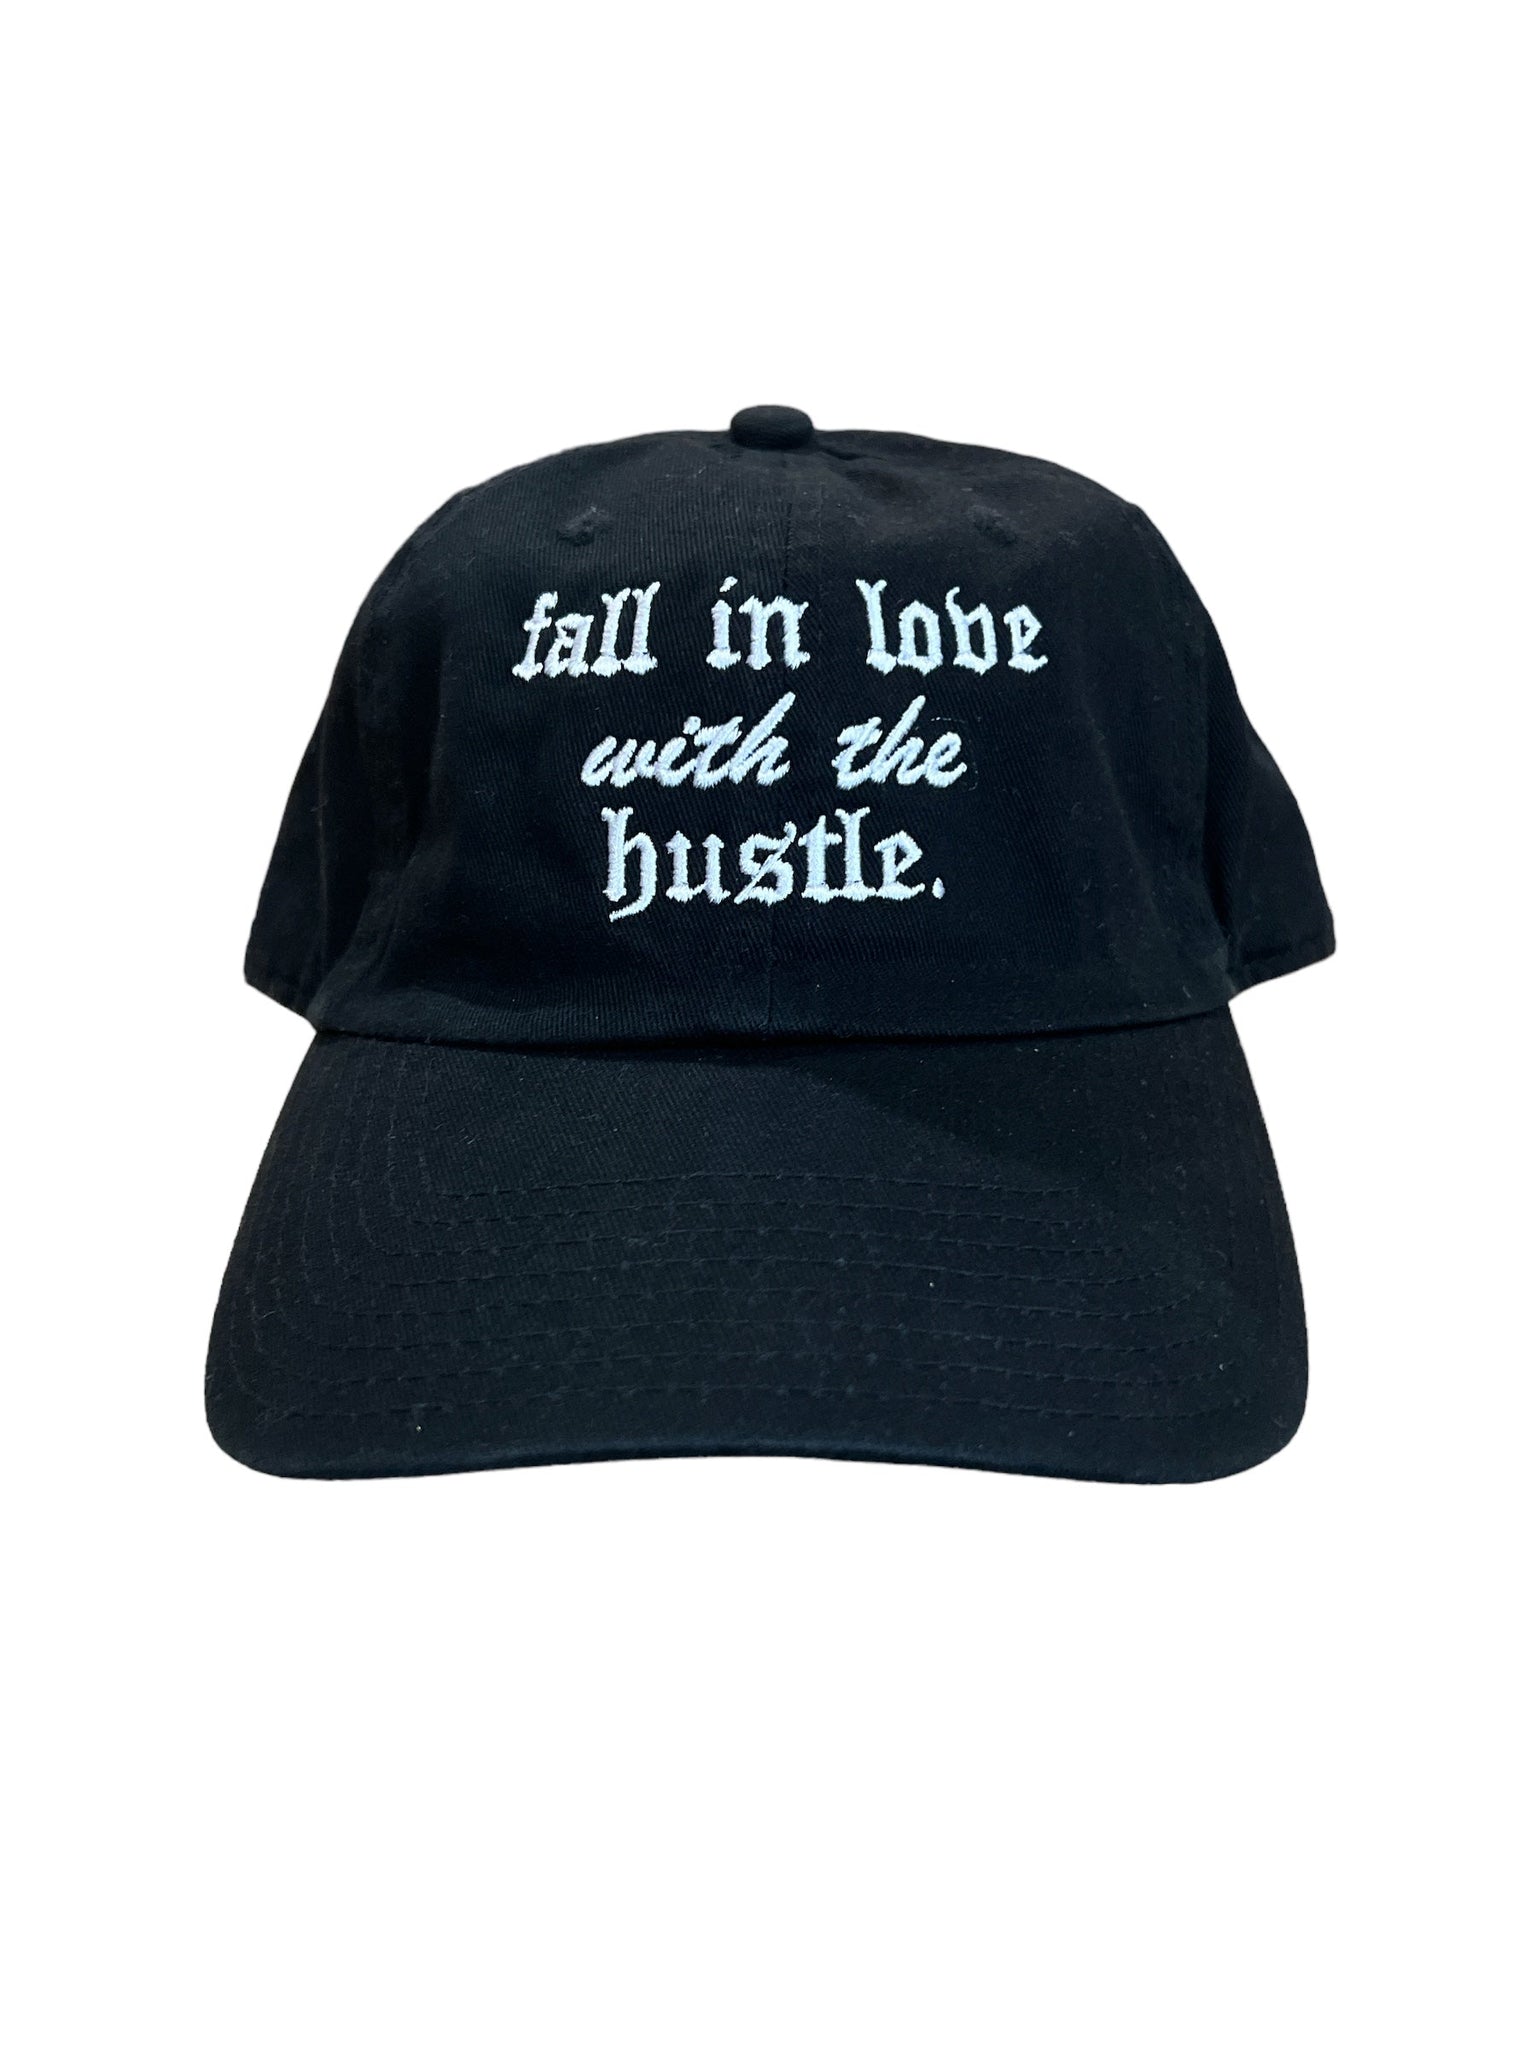 SUPBOO Love The Hustle Dad Hat - Black